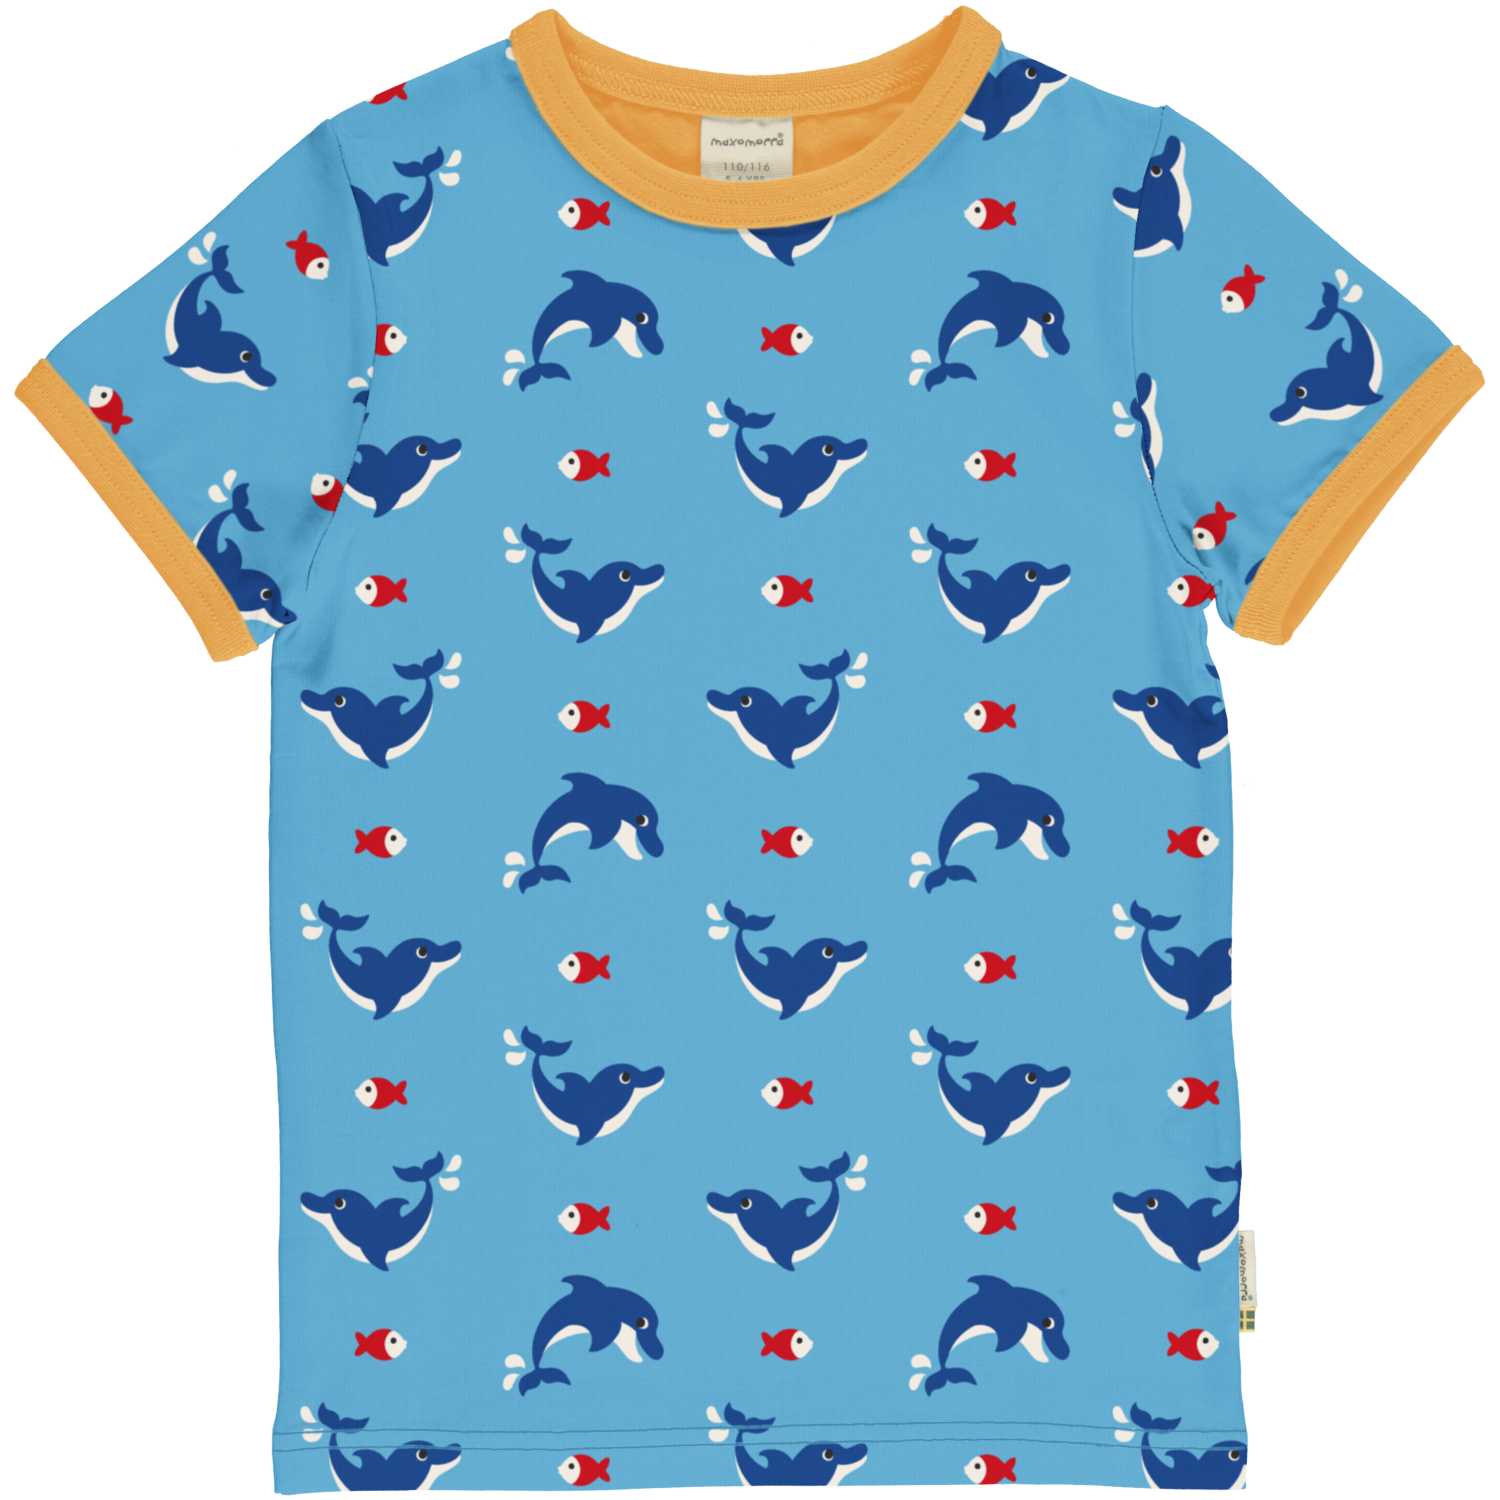 Maxomorra Dolphin Printed Top Dxs2409-Sxs2410 Clothing 3-4YRS / Blue,5-6YRS / Blue,7-8YRS / Blue